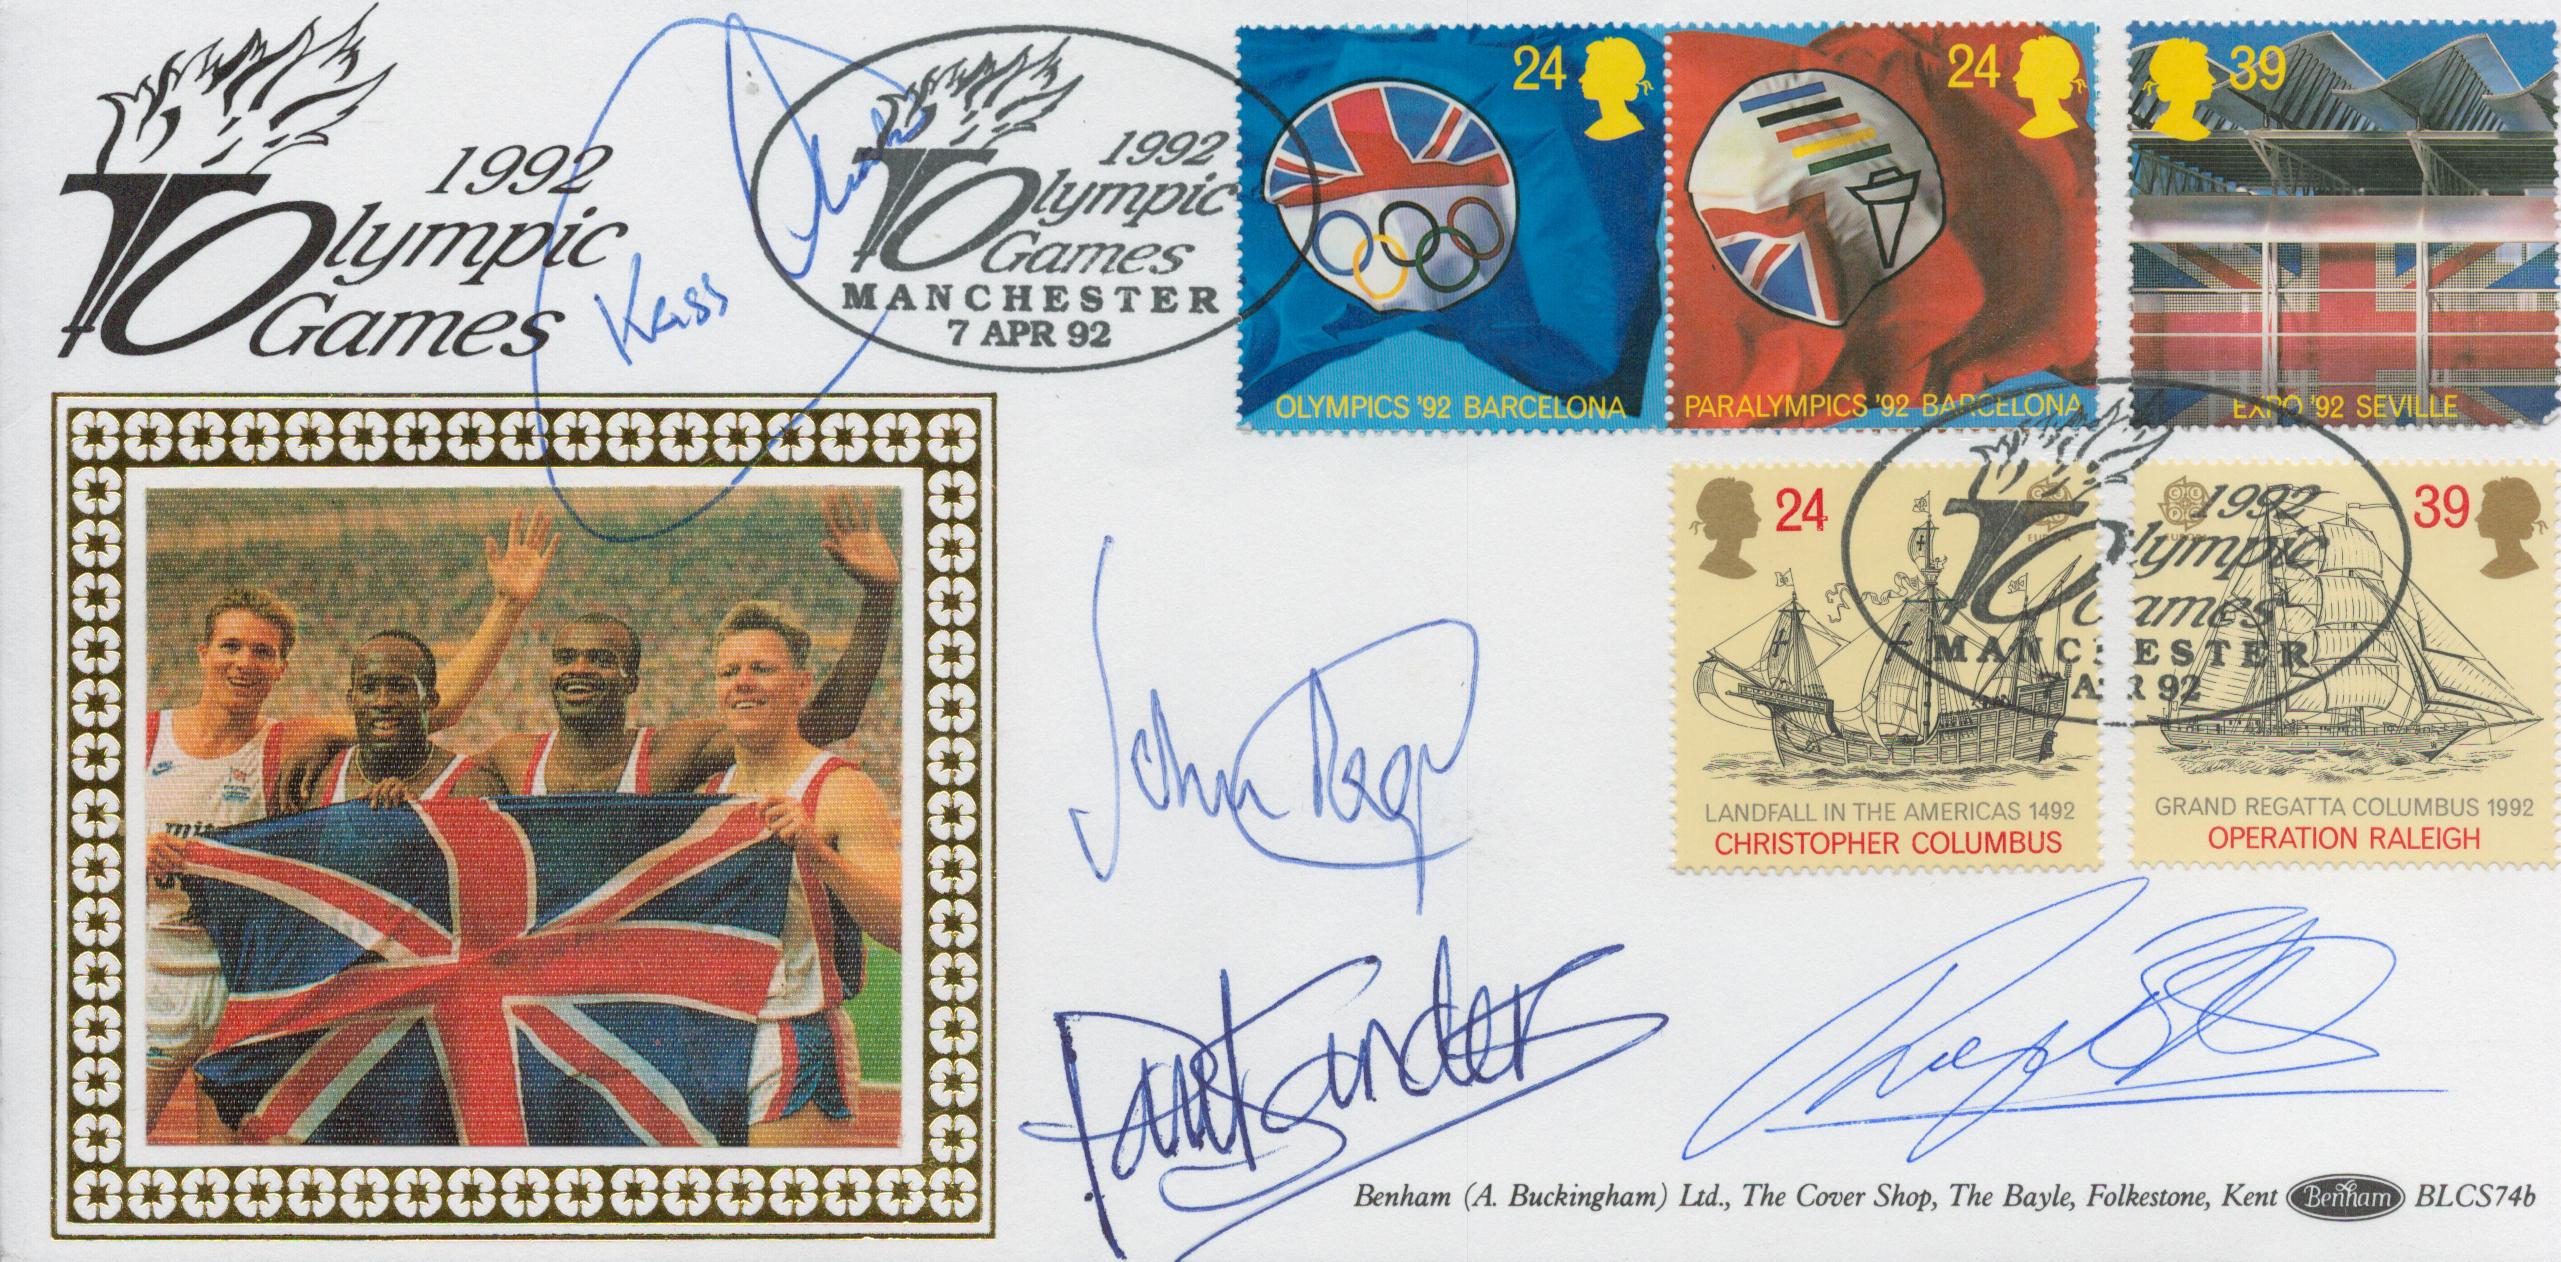 Kriss Akabusi, John Regis, Paul Tander and Roger Black signed 1992 Olympic Games FDC. 7/4/92